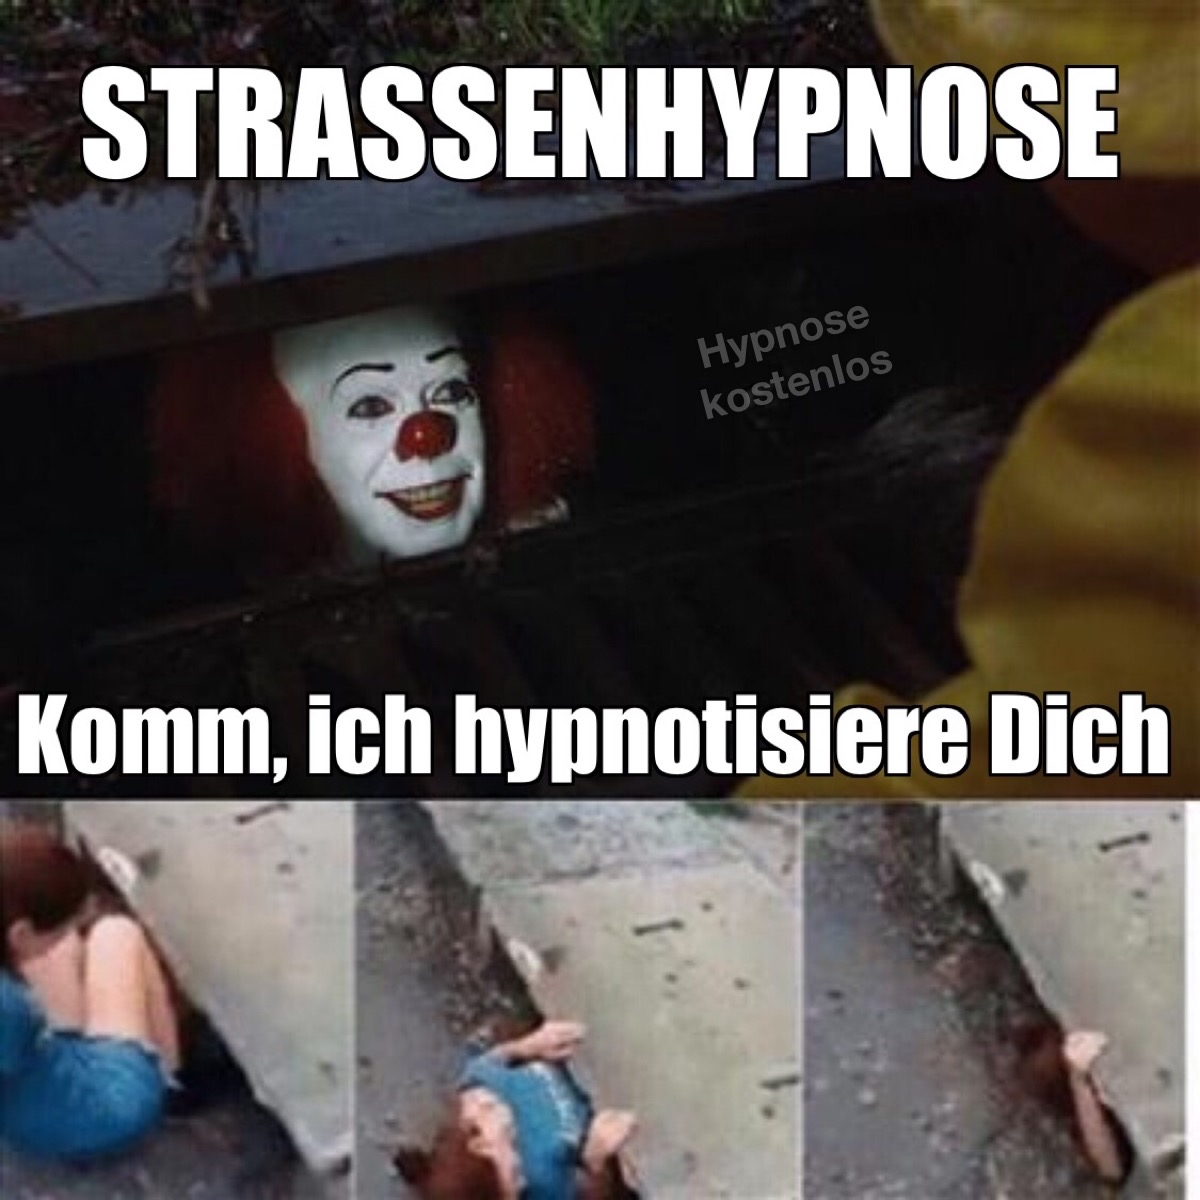 Strassenhypnose Meme.jpeg